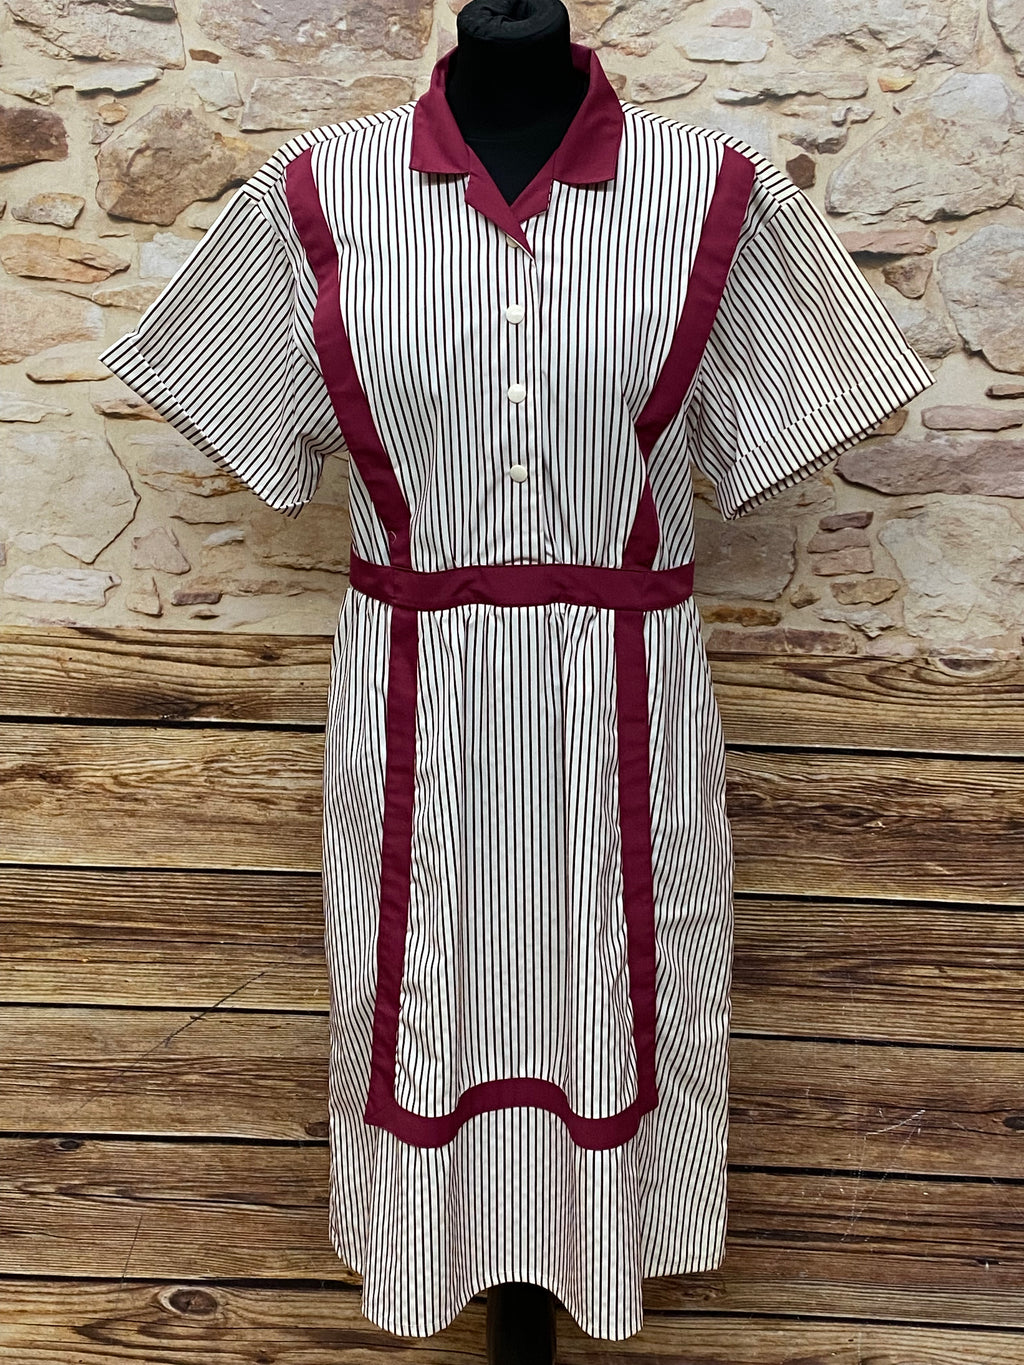 Hausmädchenkleid original Vintage Uniform gr.38